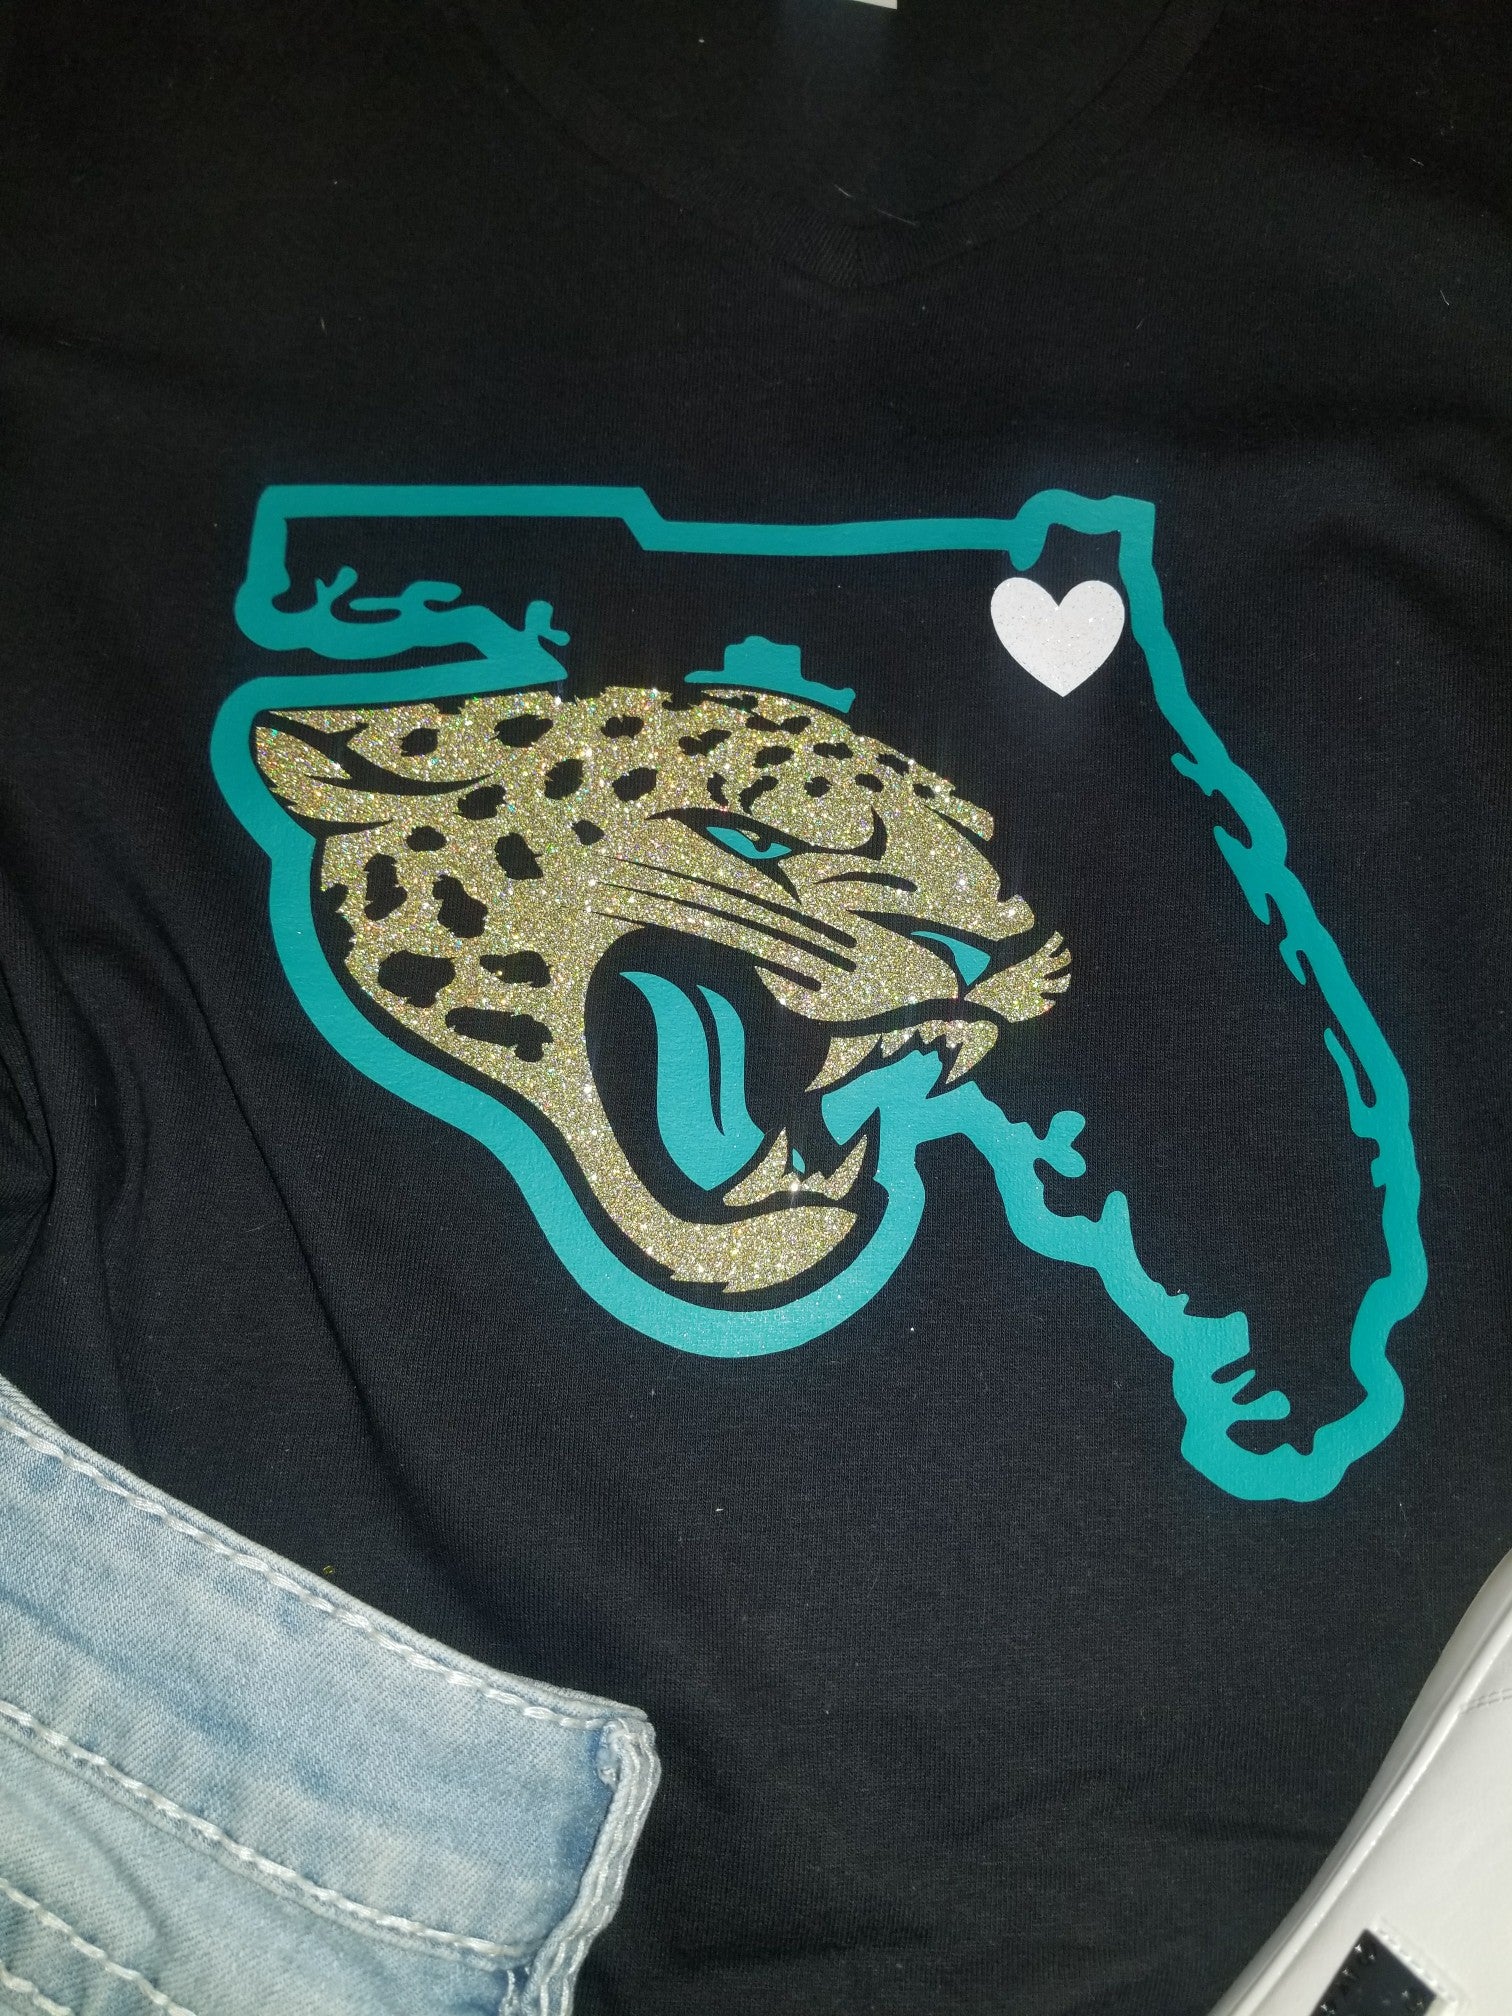 Lulu Grace Designs Jacksonville Jaguars Dripping Lips Shirt: NFL Football Fan Gear & Apparel Medium / Ladies Racerback Tank / White